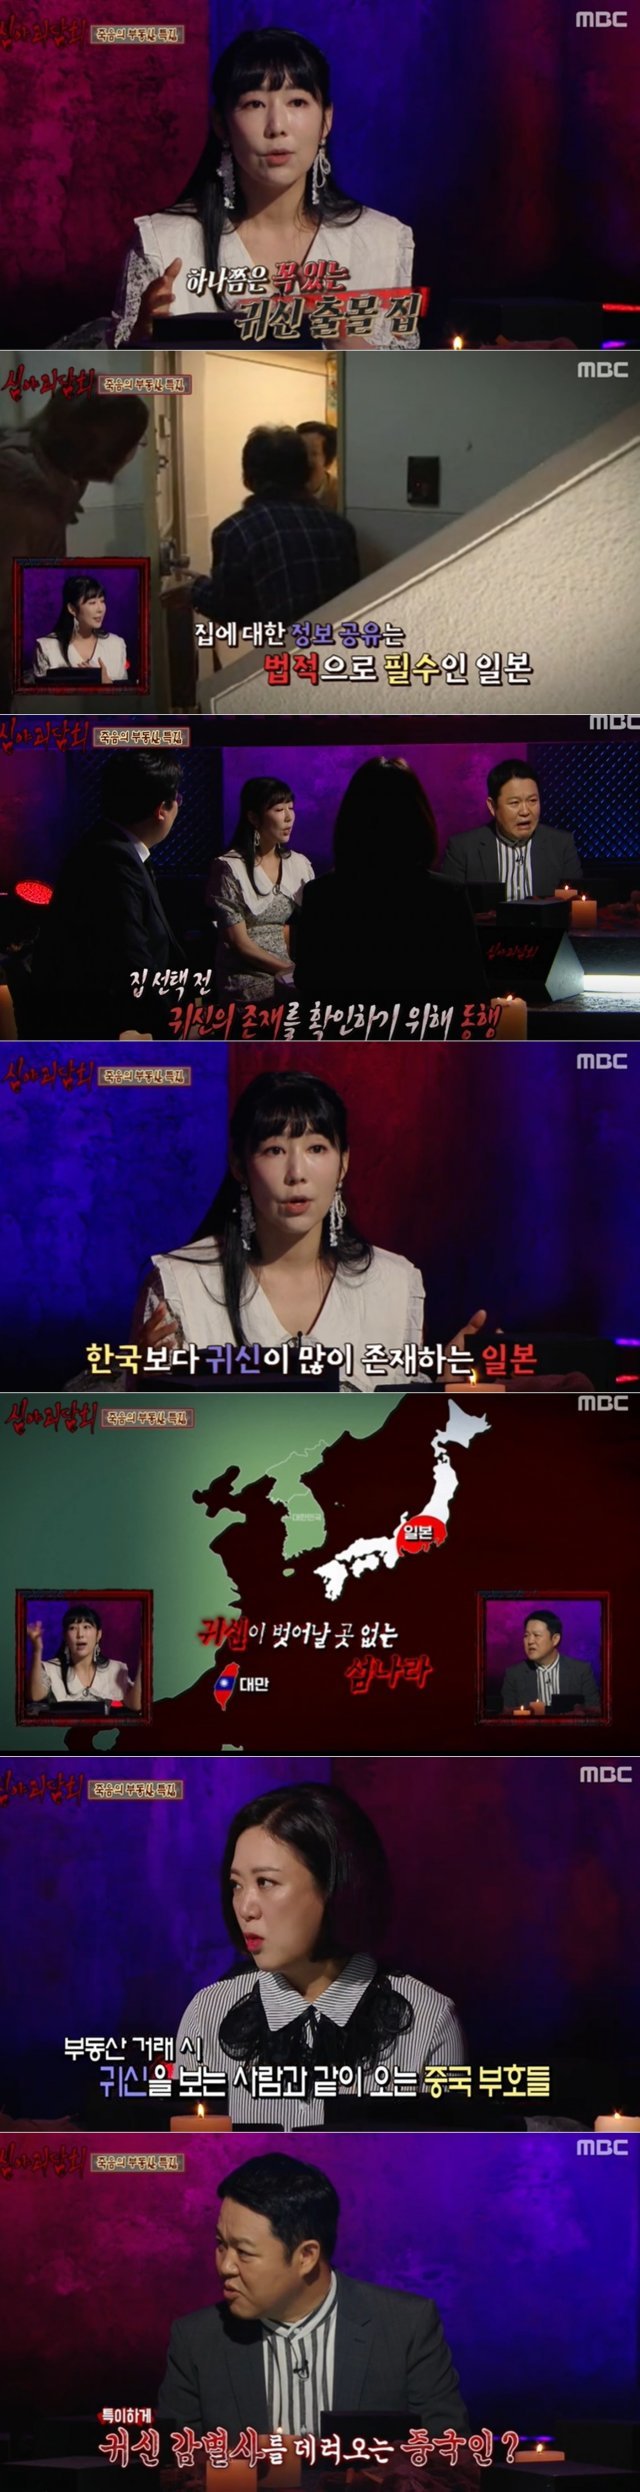 MBC 예능프로그램 ‘심야괴담회’ 방송 화면 갈무리 © 뉴스1